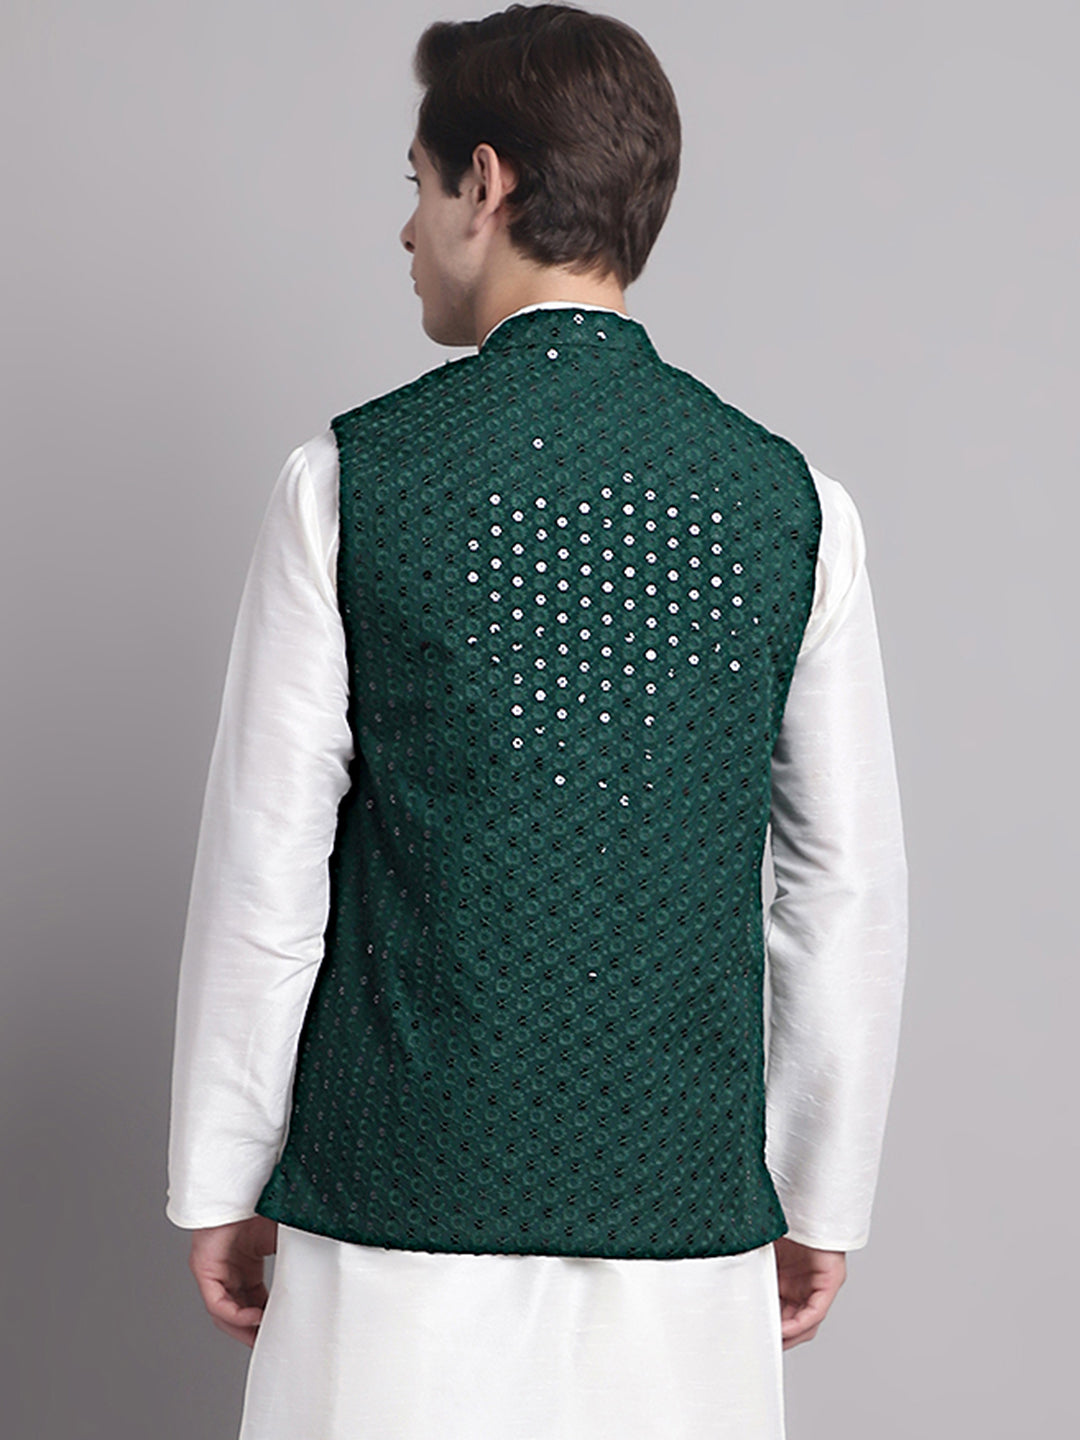 Men's Olive Green Sequins and Embroidered Nehru Jacket